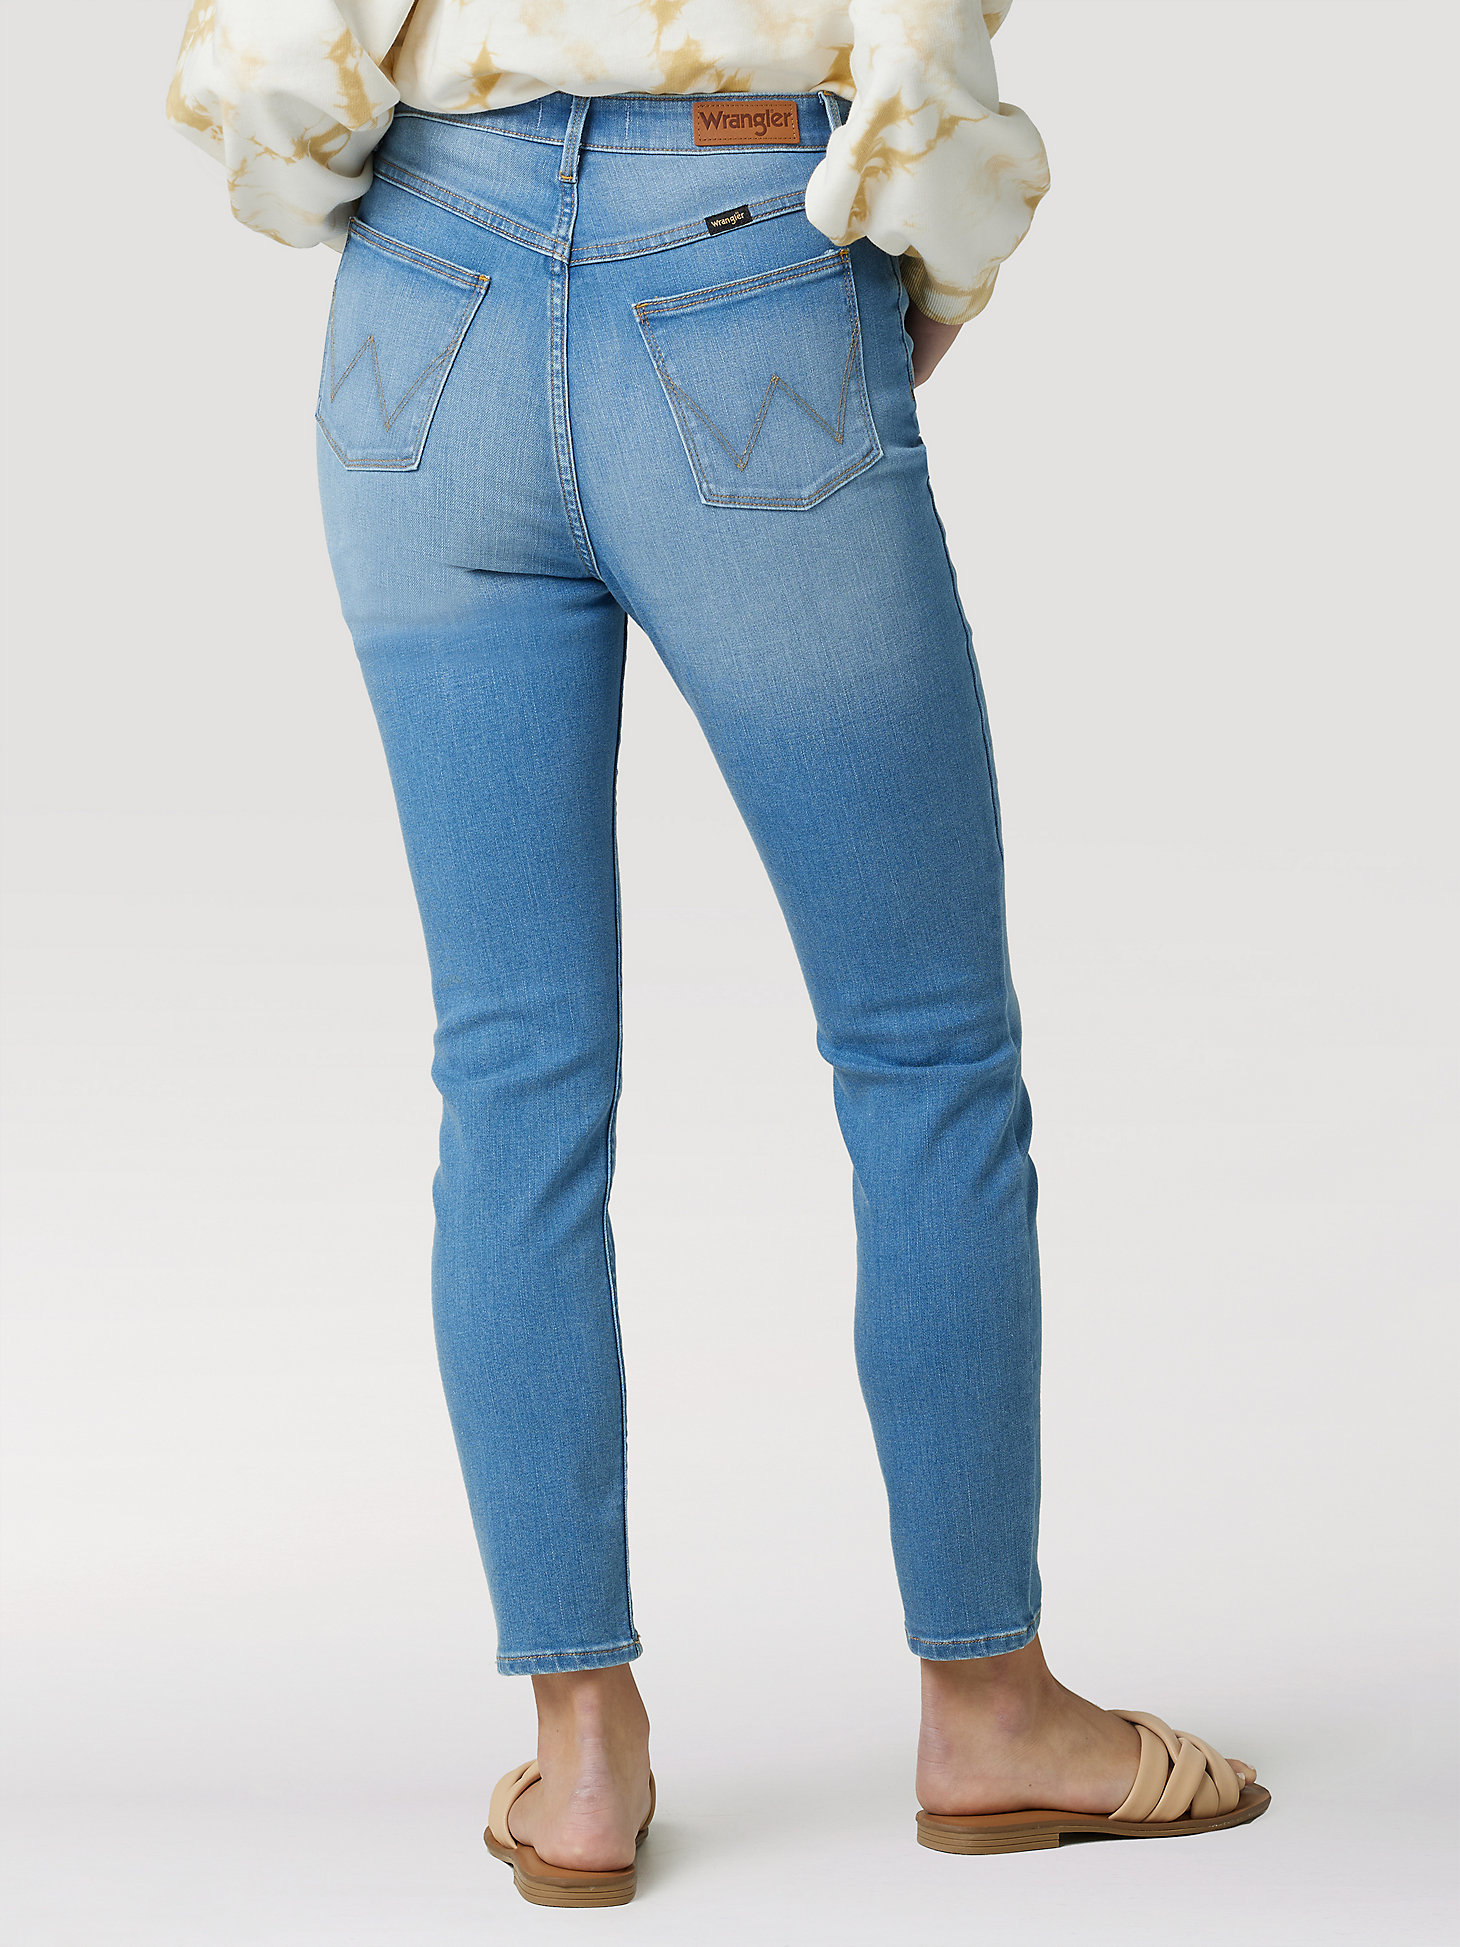 Women's Ultra High Rise Skinny Jean in Sky Light alternative view 1